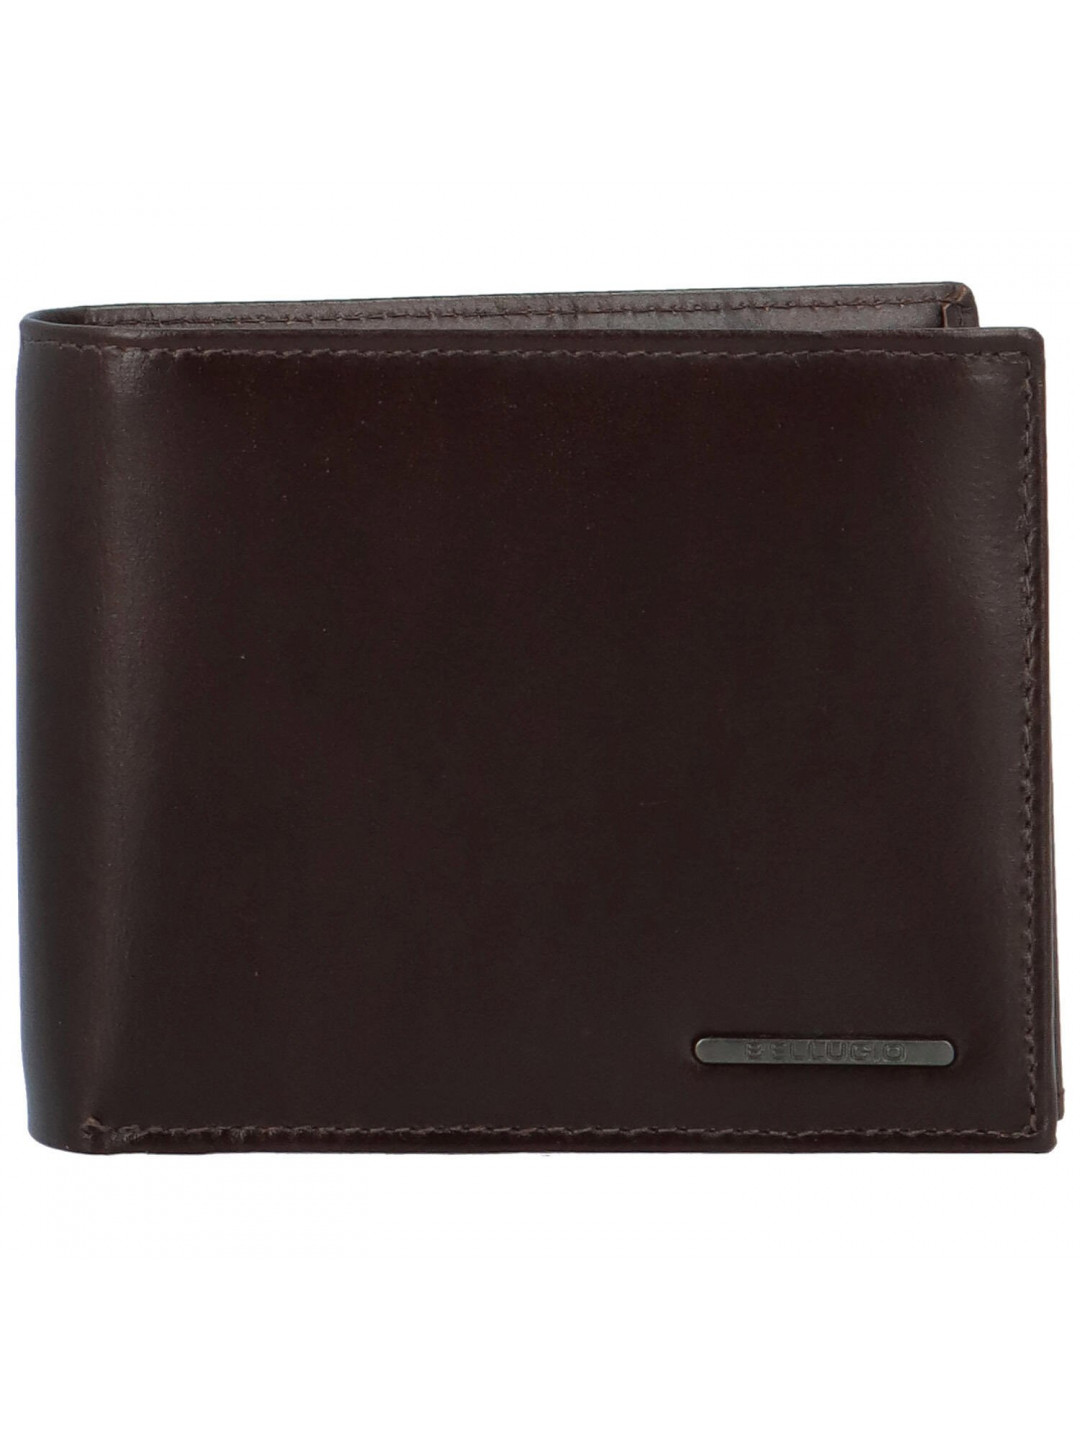 Pánská kožená peněženka hnědá – Bellugio Weron